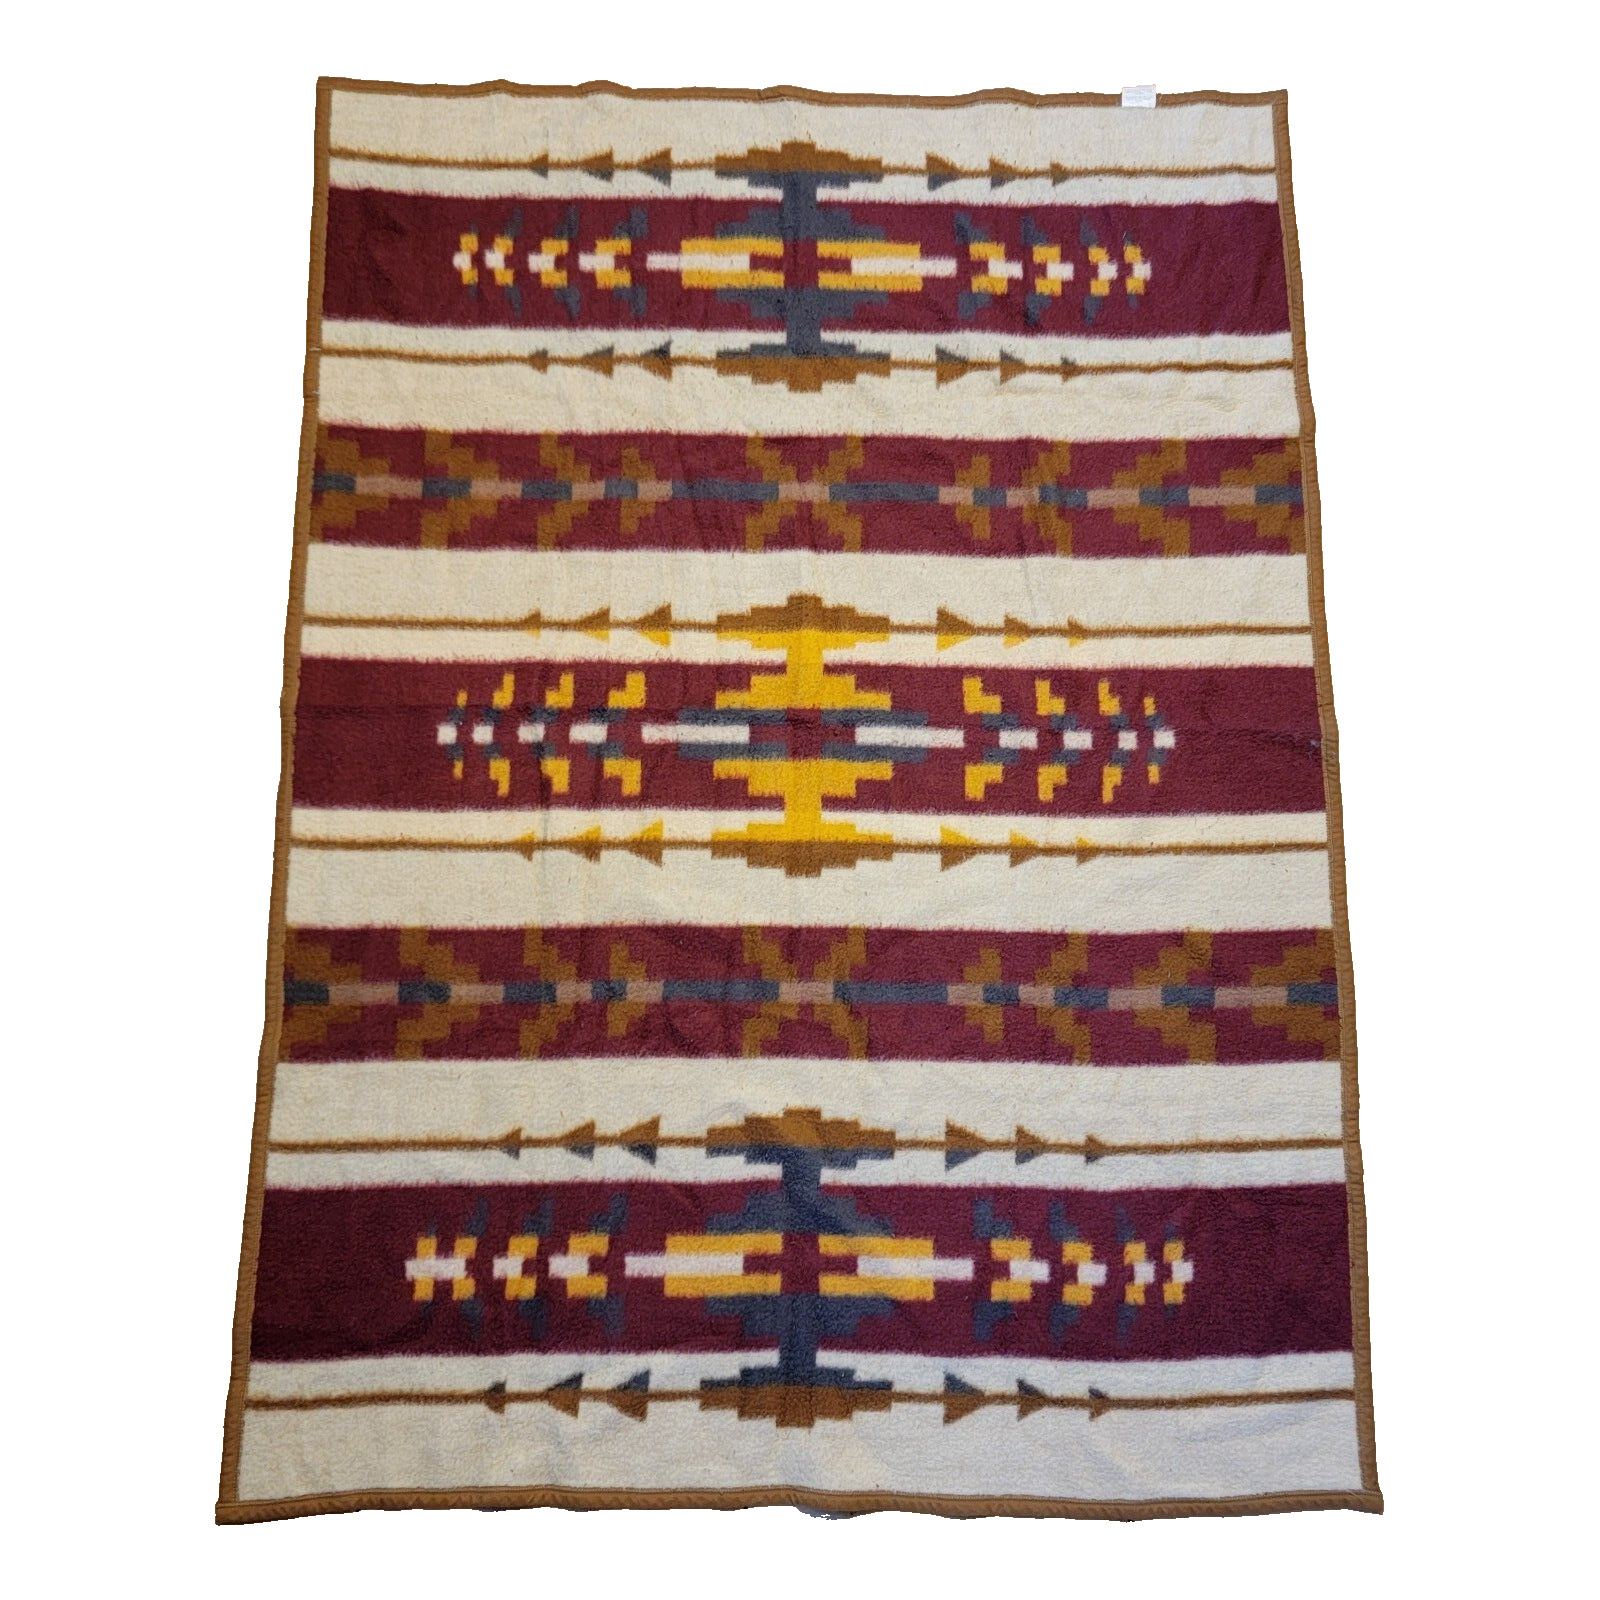 Biederlack Of America Blanket Tribal Southwest Pattern Double Sided 75 x 52 in